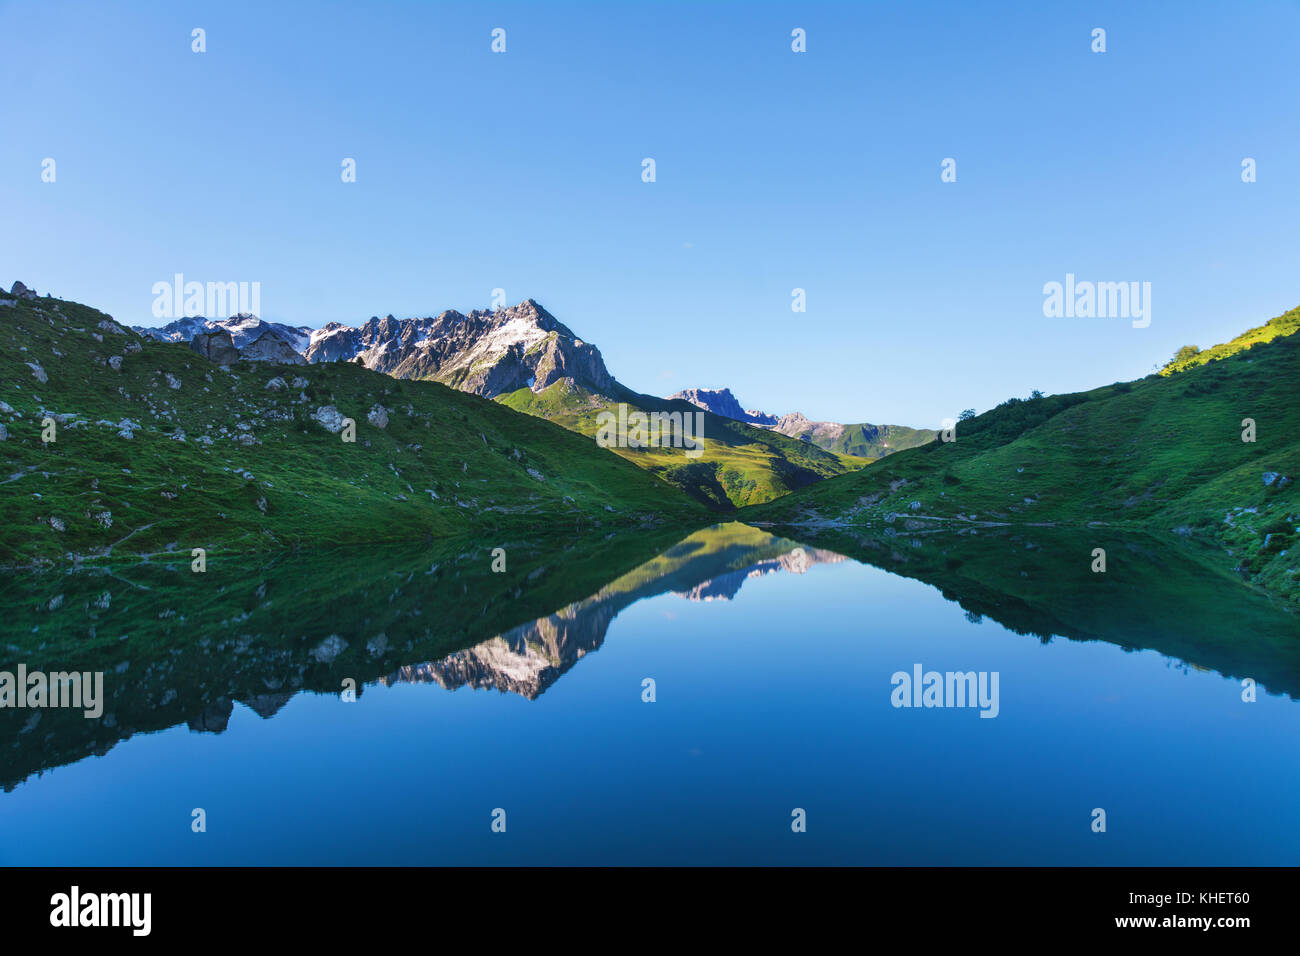 Partnunsee. Mountainslake in Svizzera. Mirrored Mountain background su lago limpido. Foto Stock